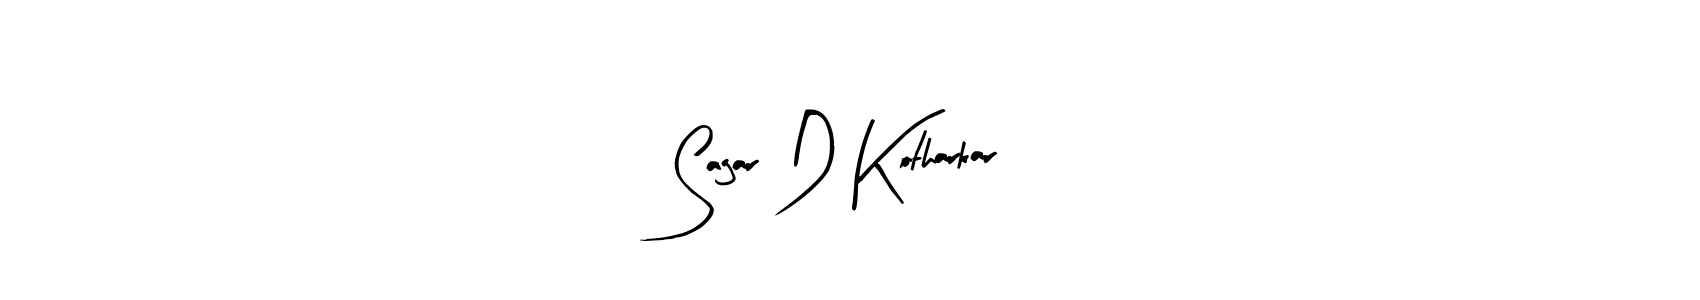 Make a beautiful signature design for name Sagar D Kotharkar. Use this online signature maker to create a handwritten signature for free. Sagar D Kotharkar signature style 8 images and pictures png